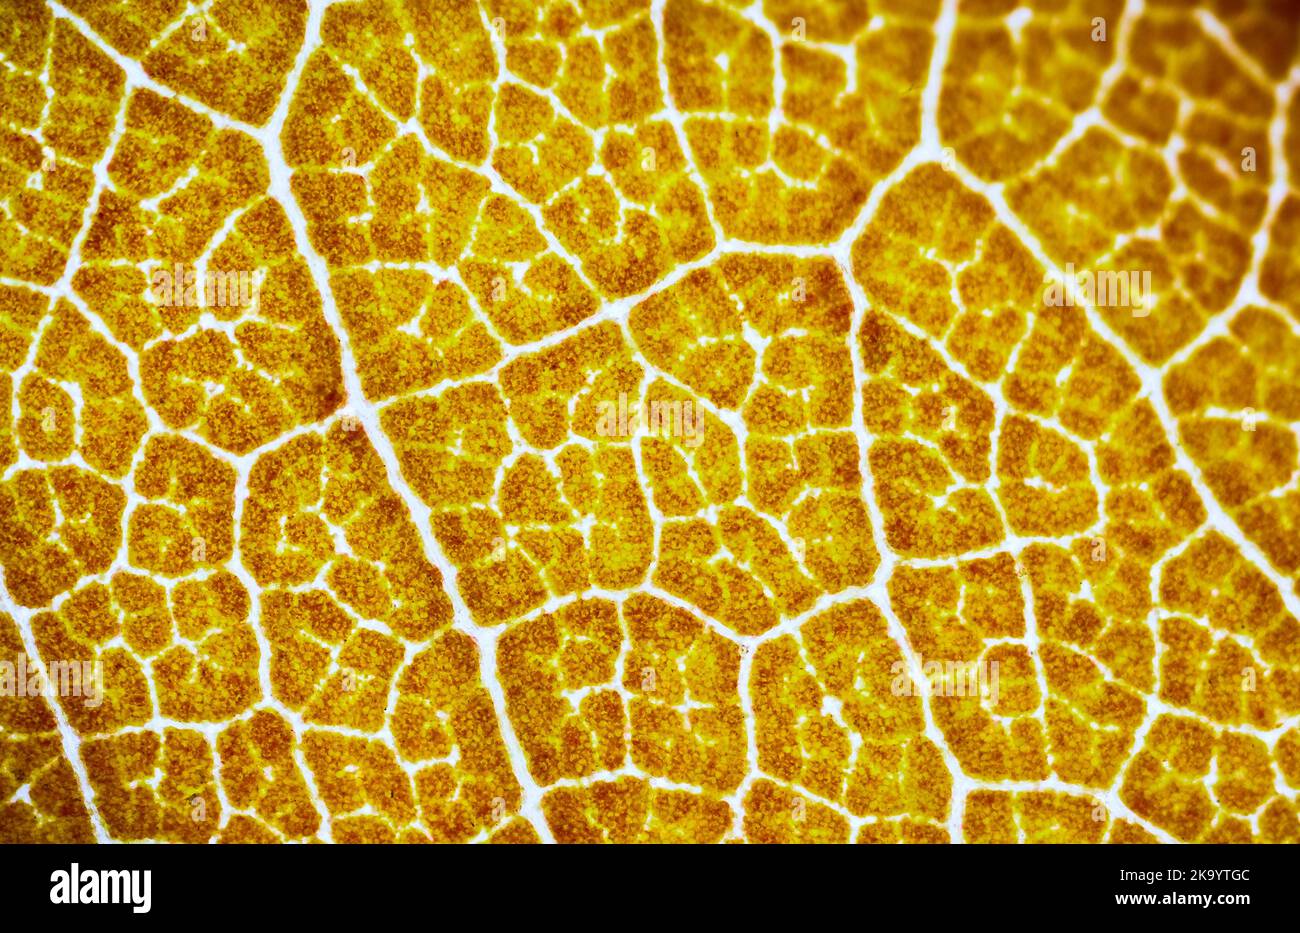 beautiful autumn leaf patterns under the microscope Stock Photo